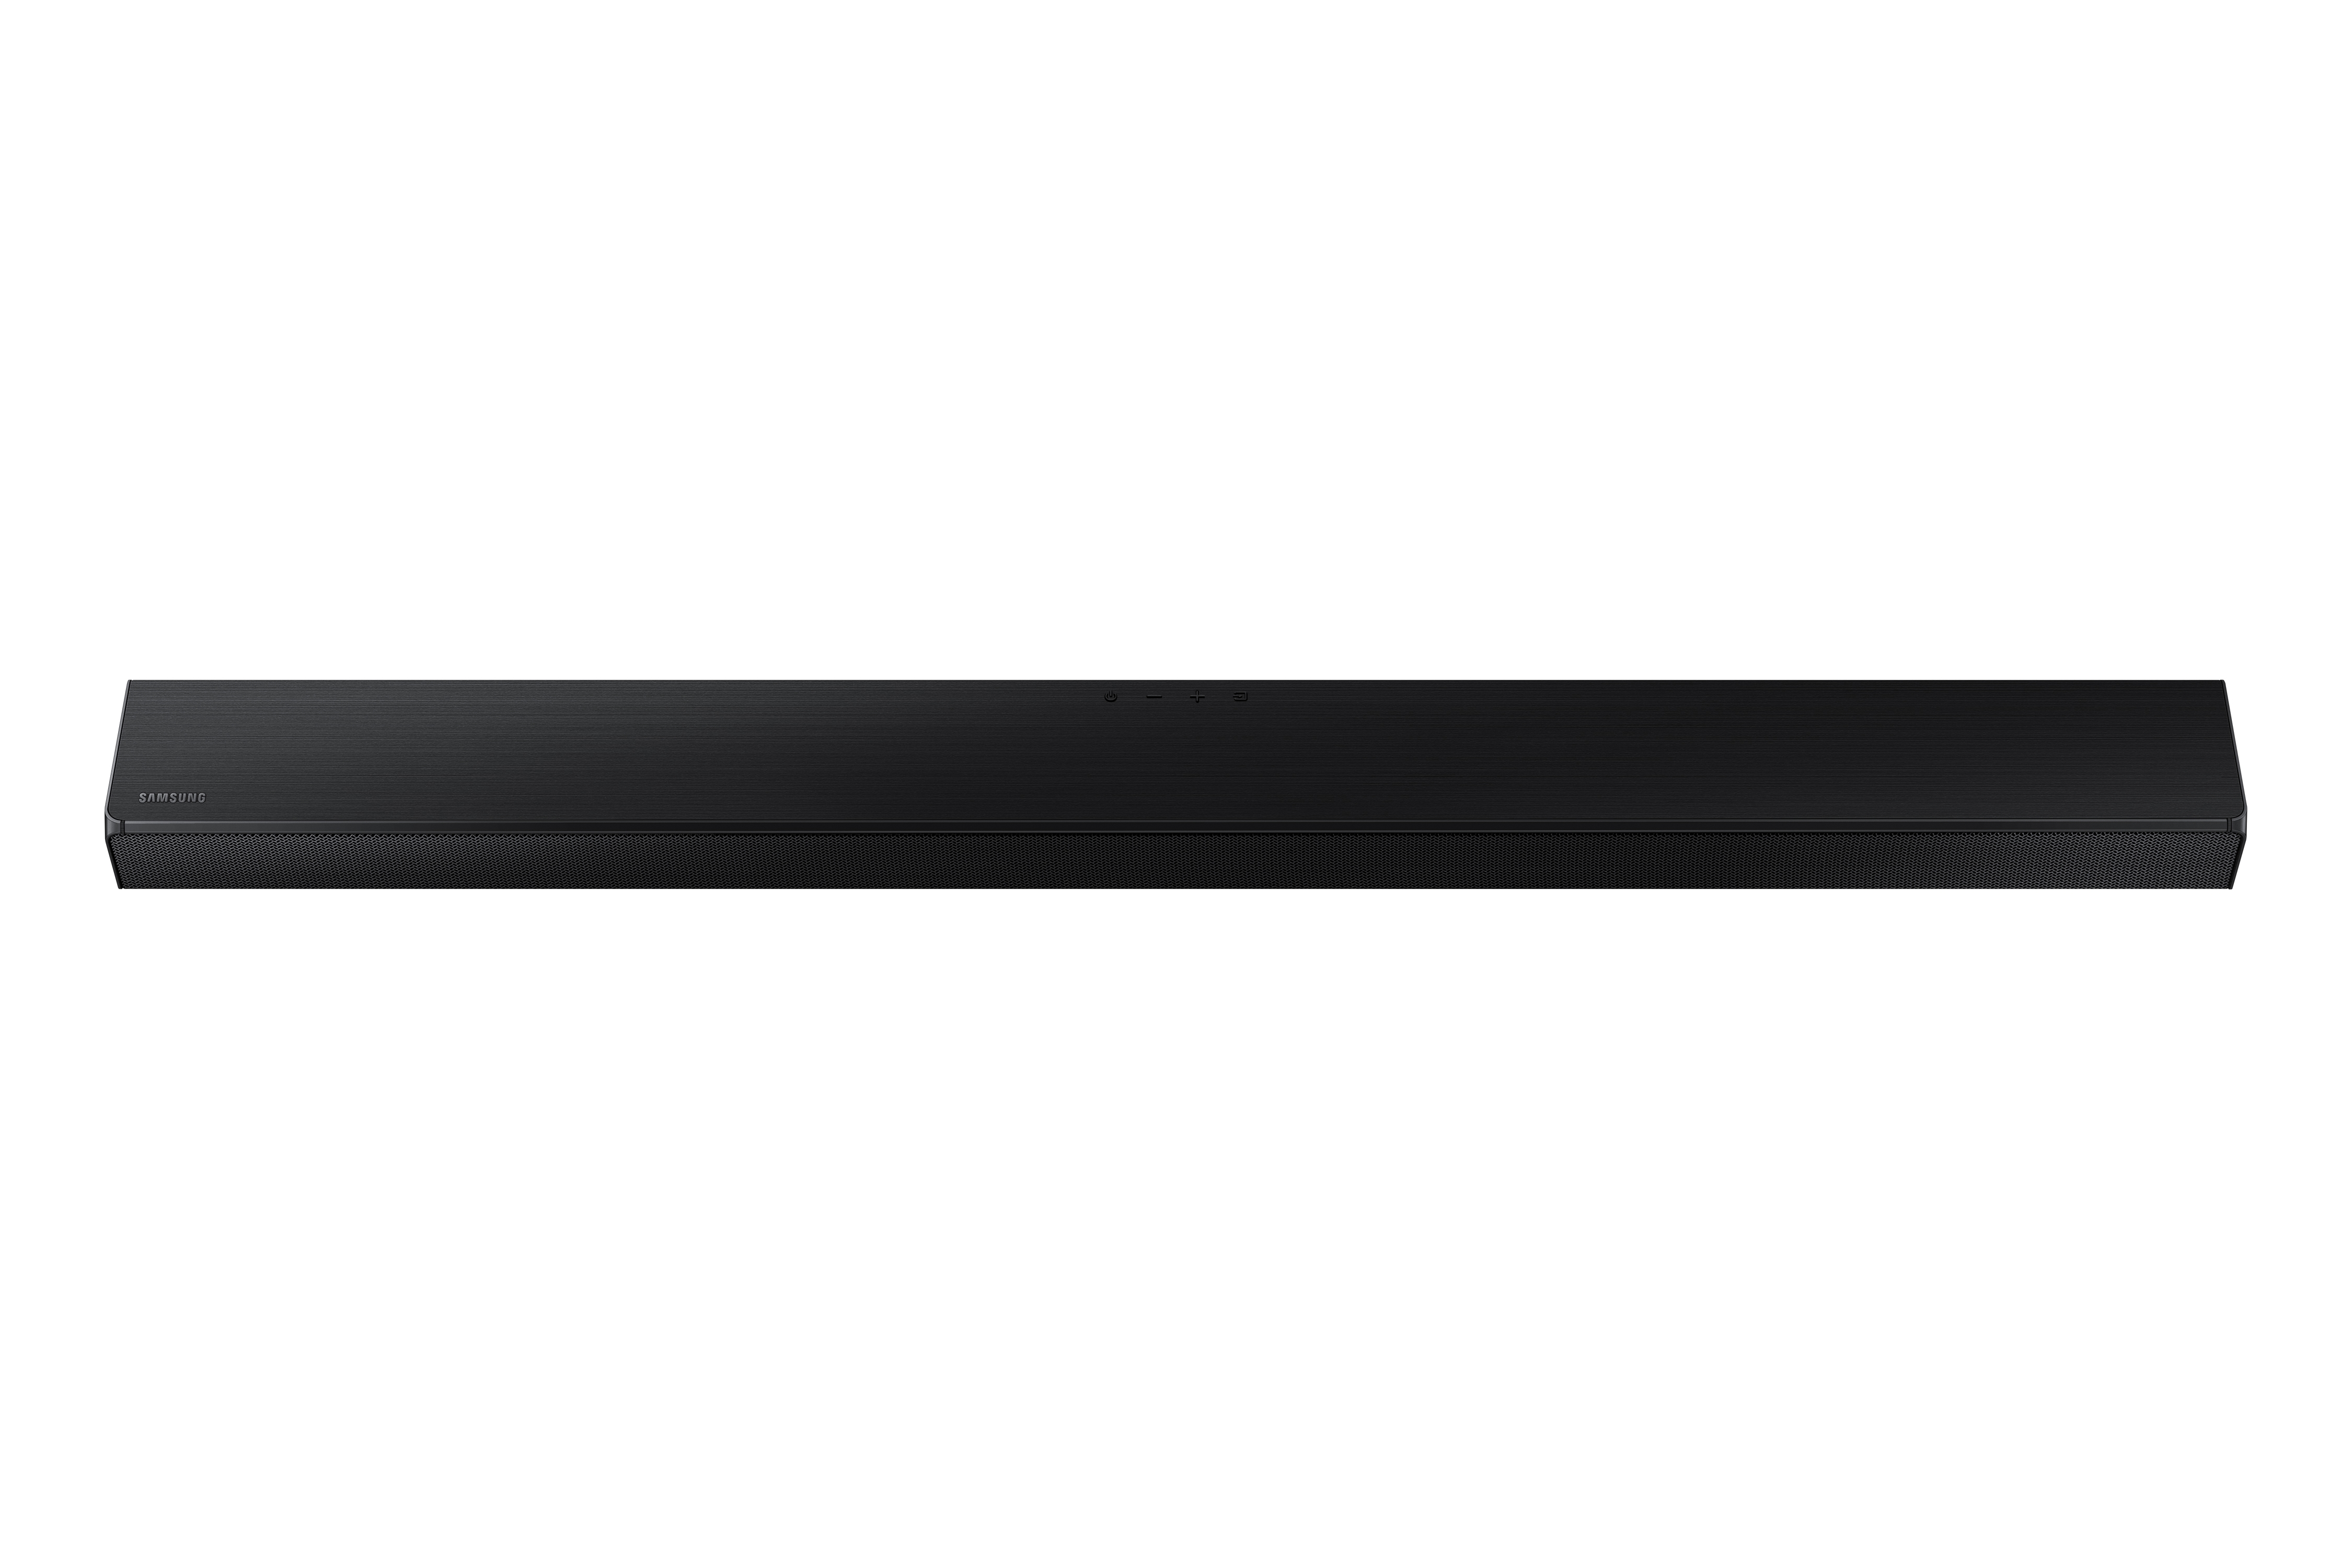 SAMSUNG 310W 3.1ch Soundbar with Wireless Subwoofer - HW-T60M (2020) - image 4 of 10